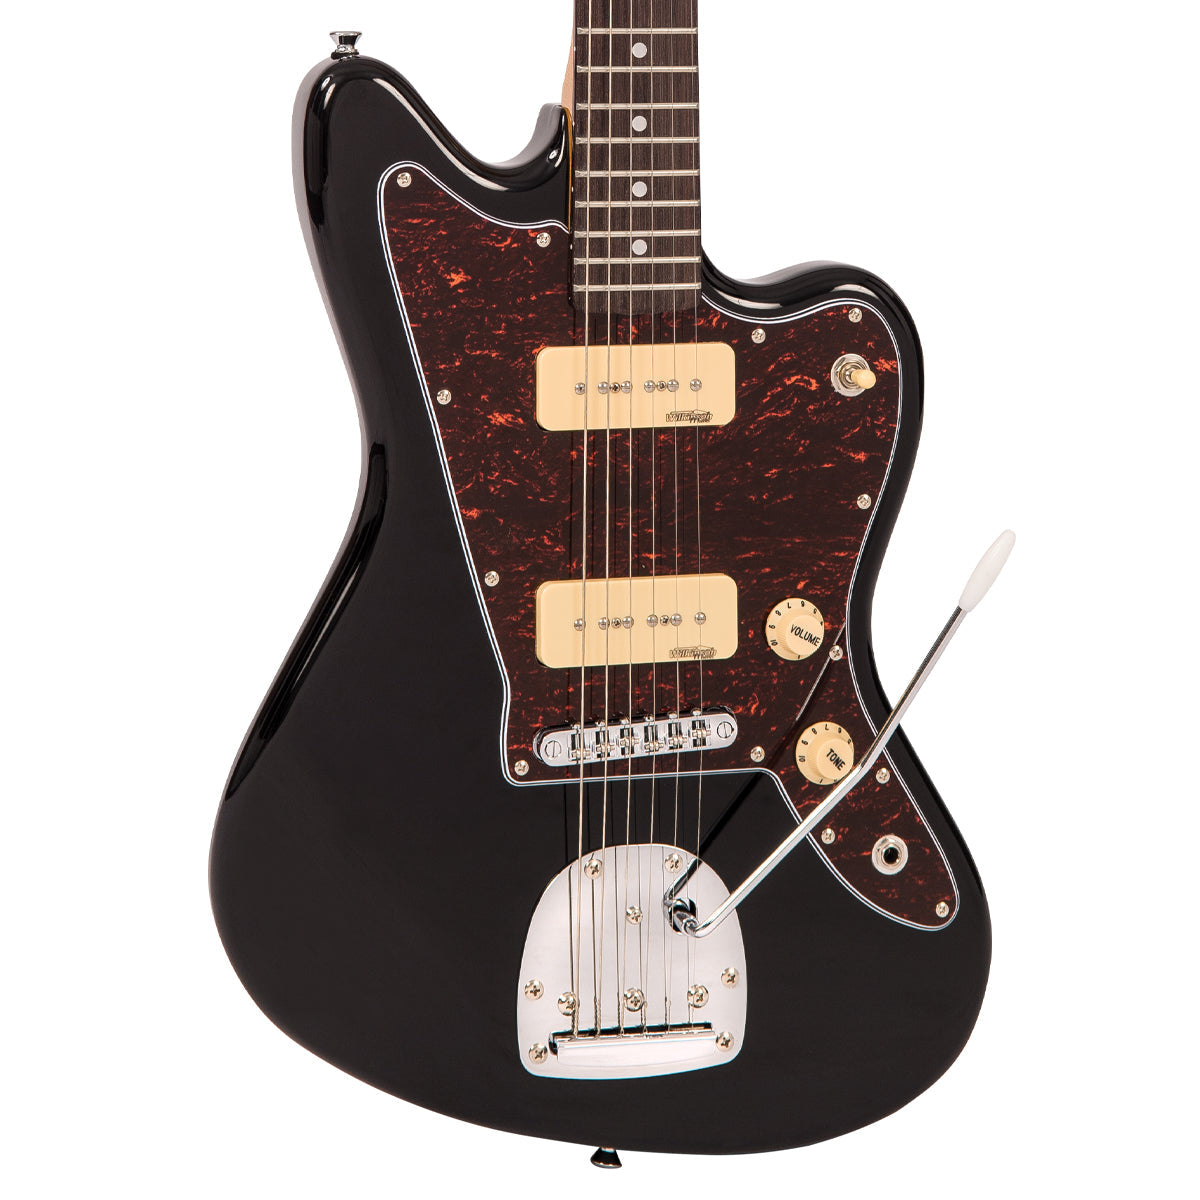 Vintage V65 ReIssued Vibrato Electric Guitar ~ Boulevard Black, Electric Guitar for sale at Richards Guitars.